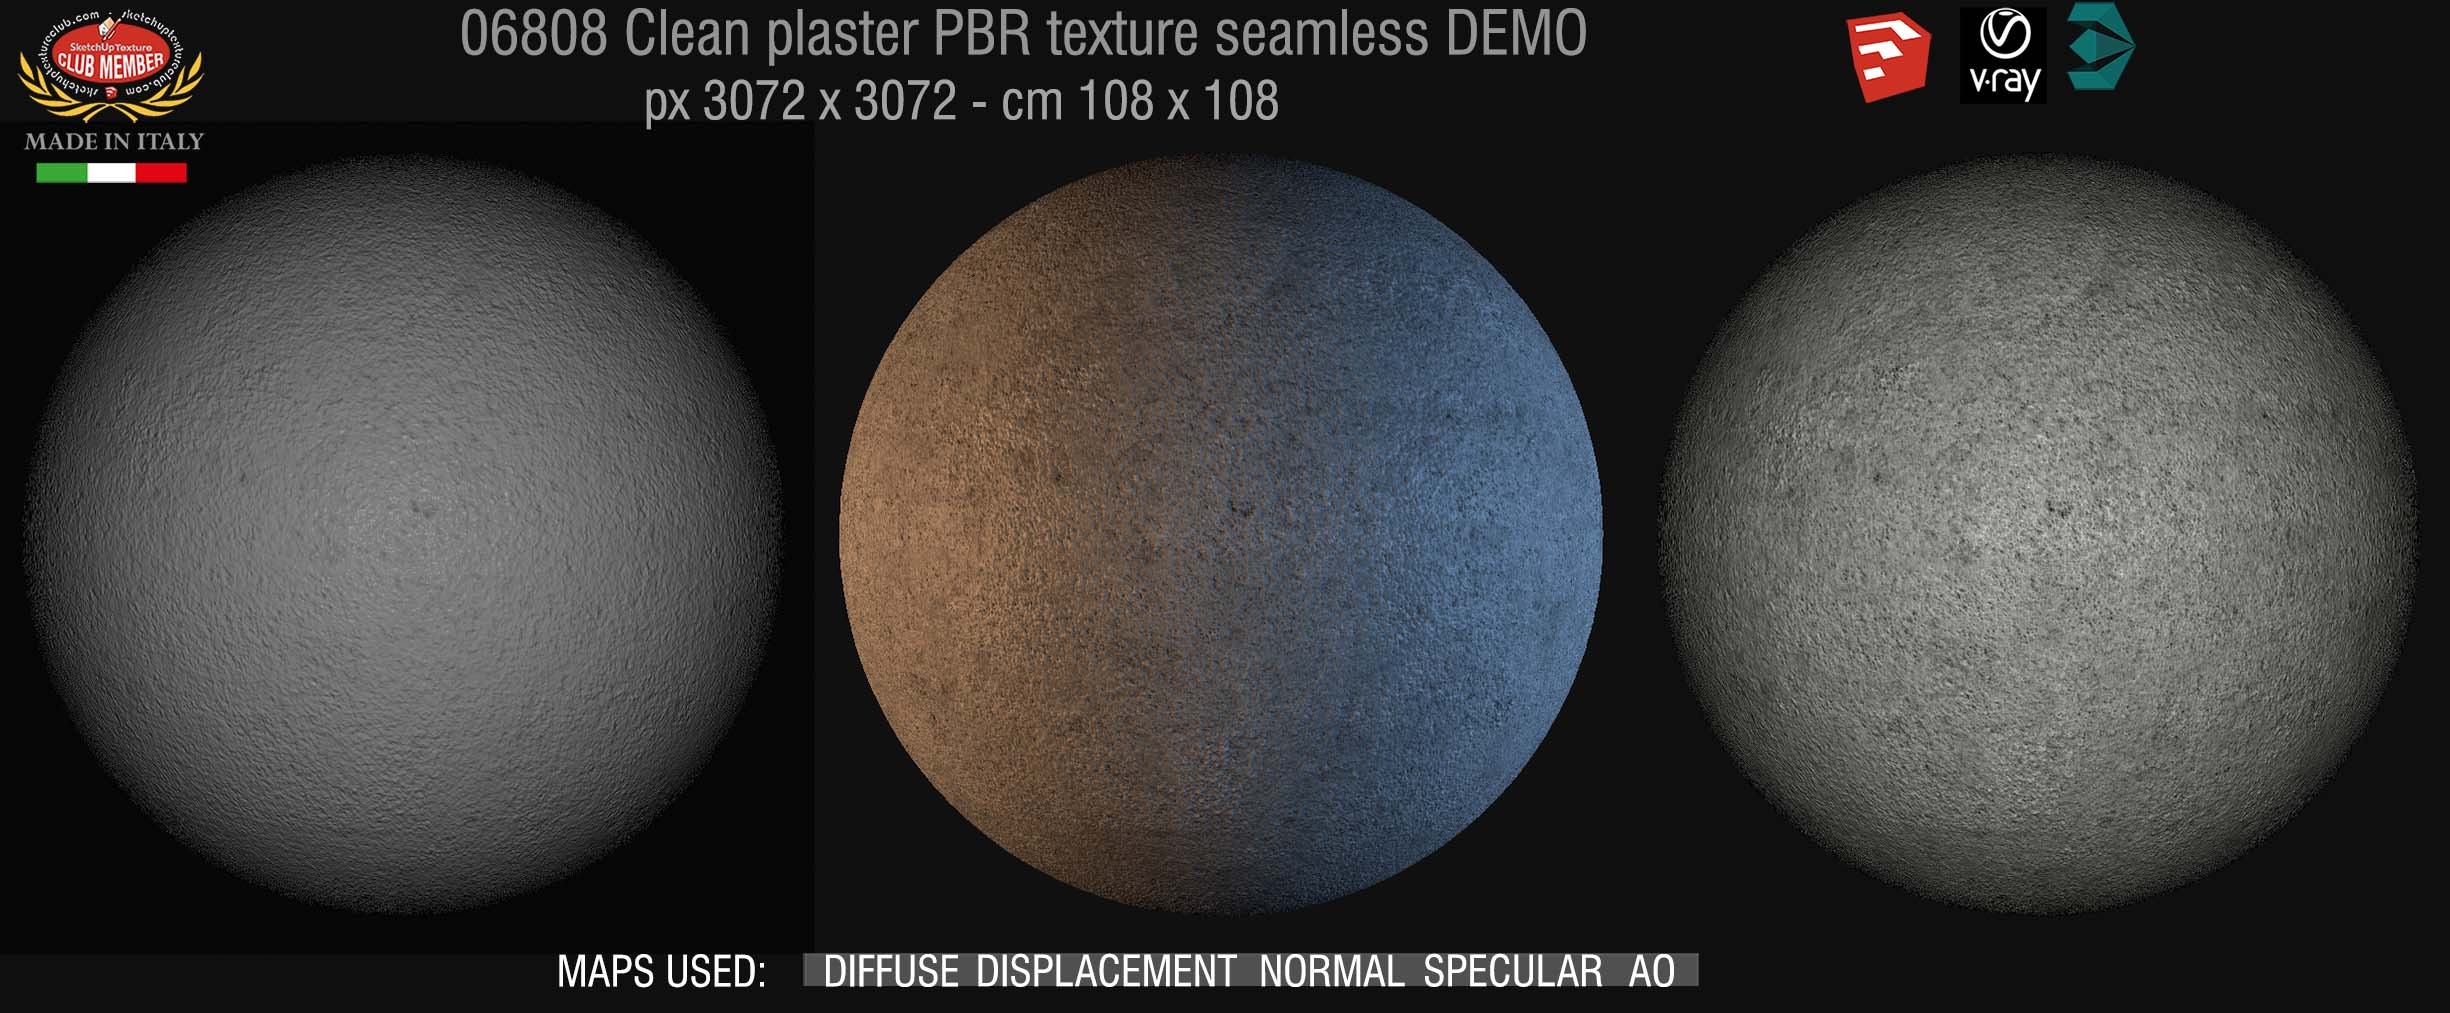 06808 clean plaster PBR texture seamless DEMO